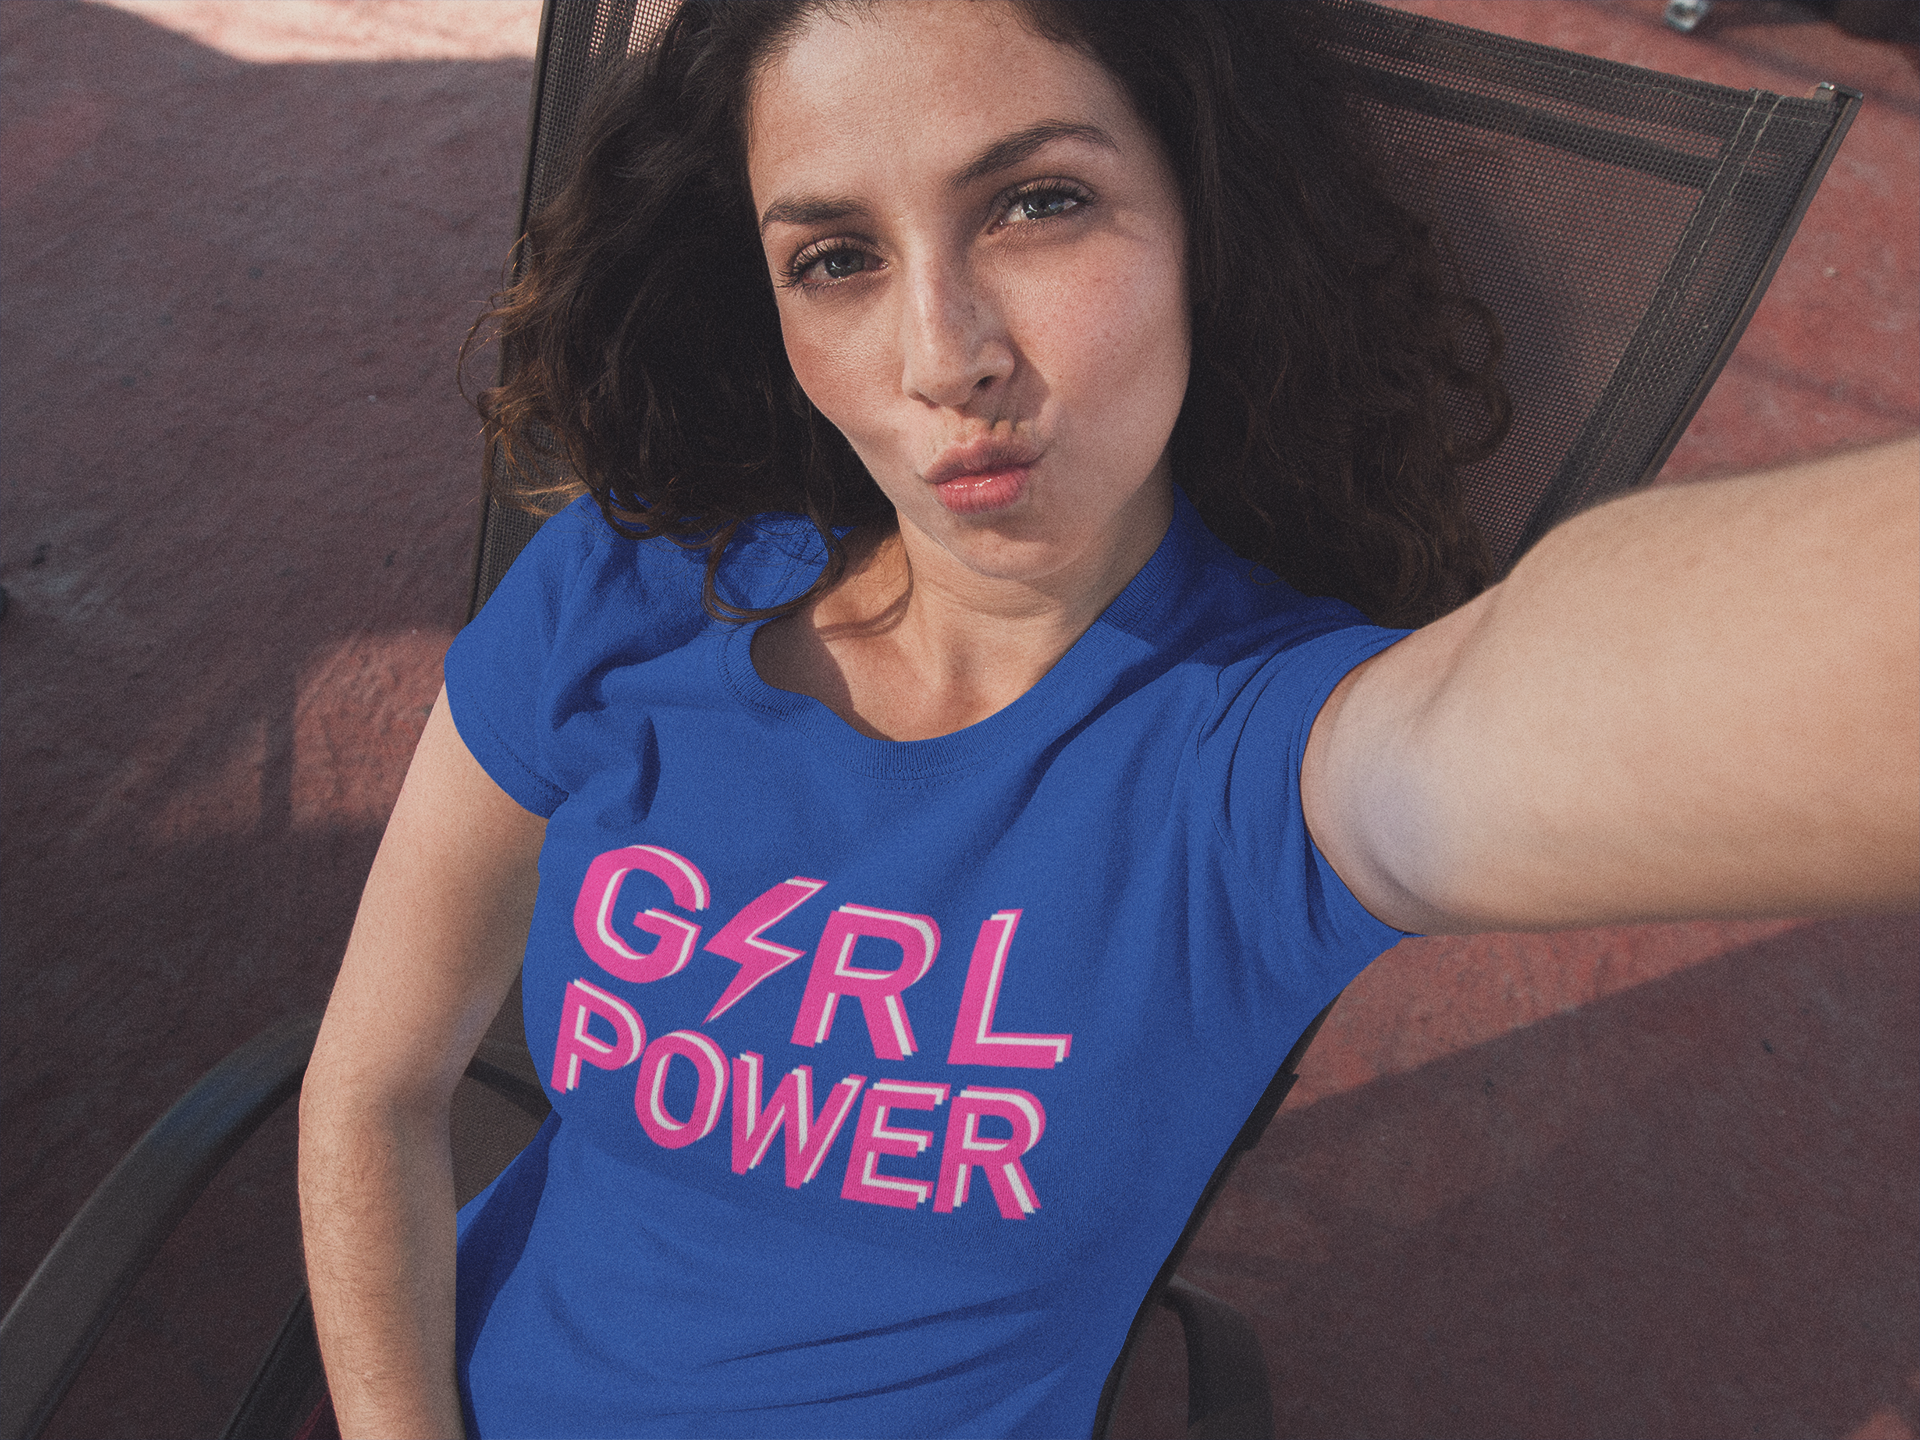 Girl Power T-Shirt Women